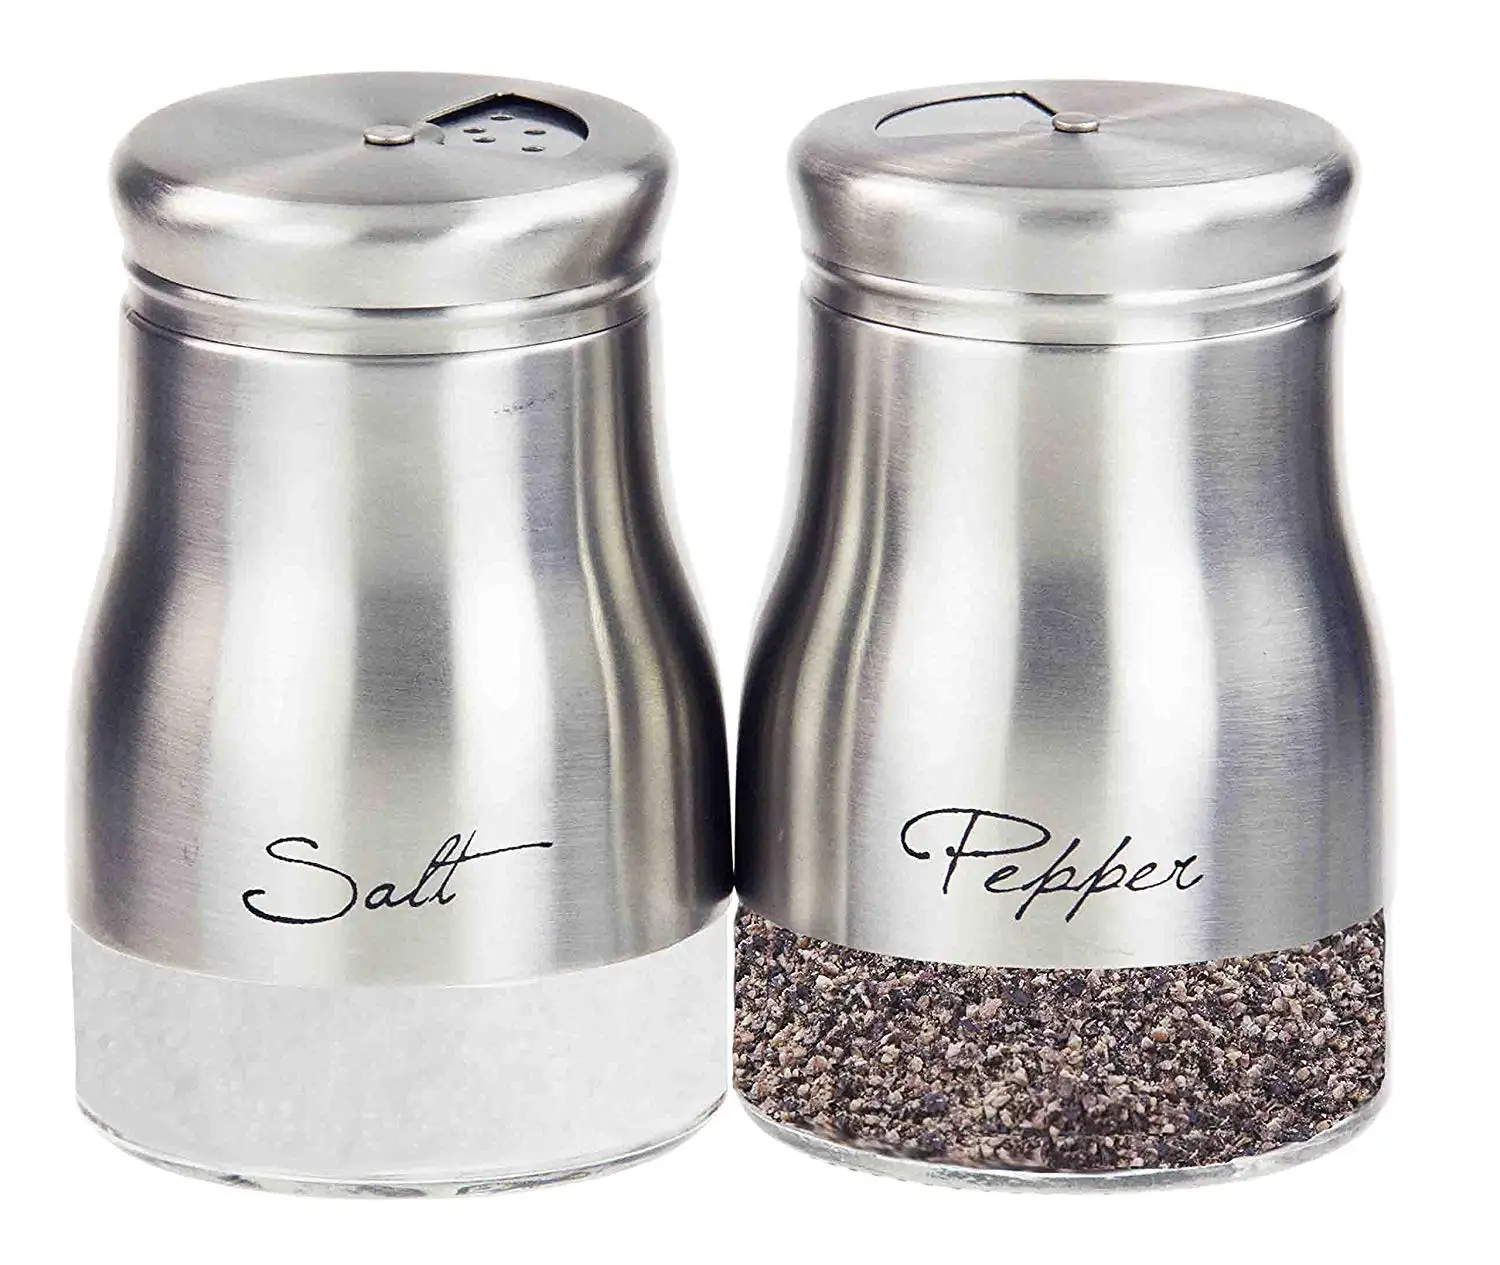 Deluxe Salt and Pepper Elegant Design Jar Shaker Set.